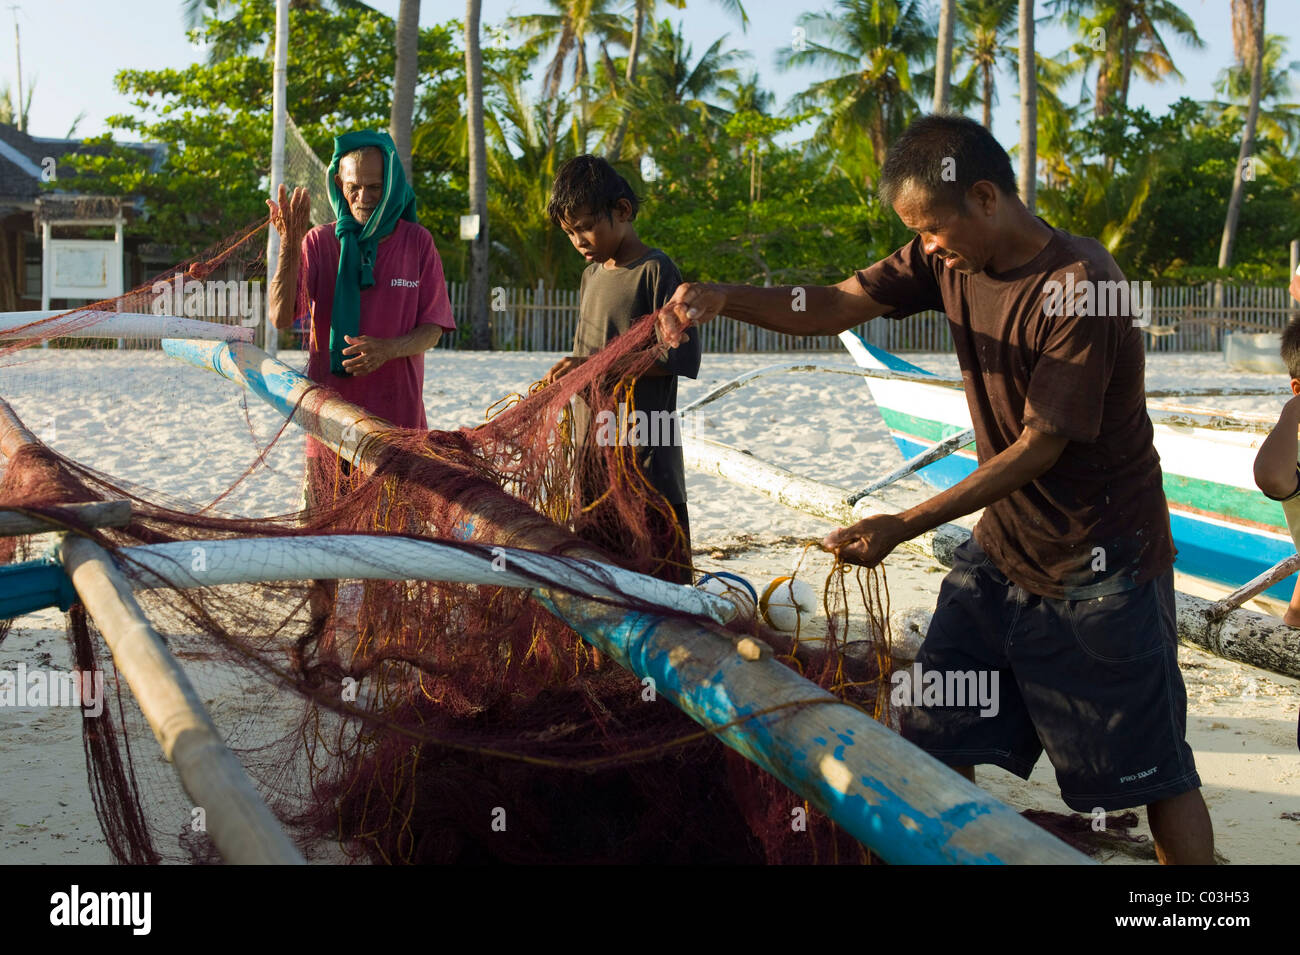 Fishermen on the beach, Malapasqua, Philippines, Asia Stock Photo